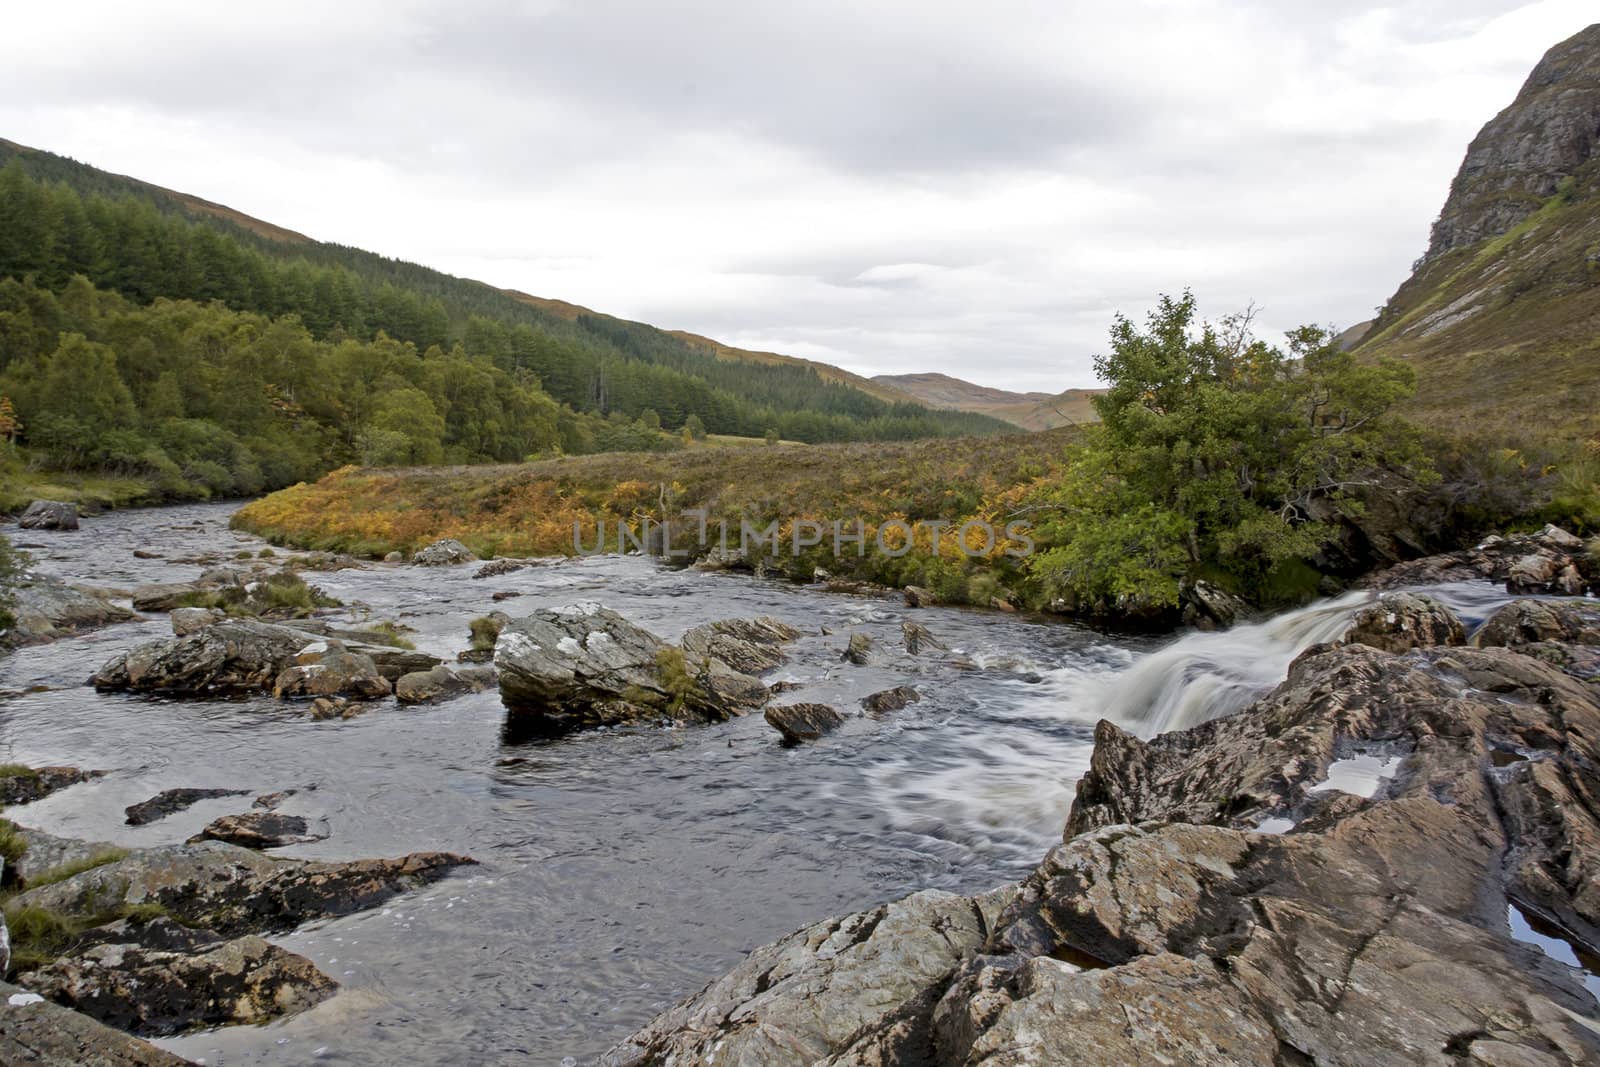 small river in scottish highlands flowing through heathland